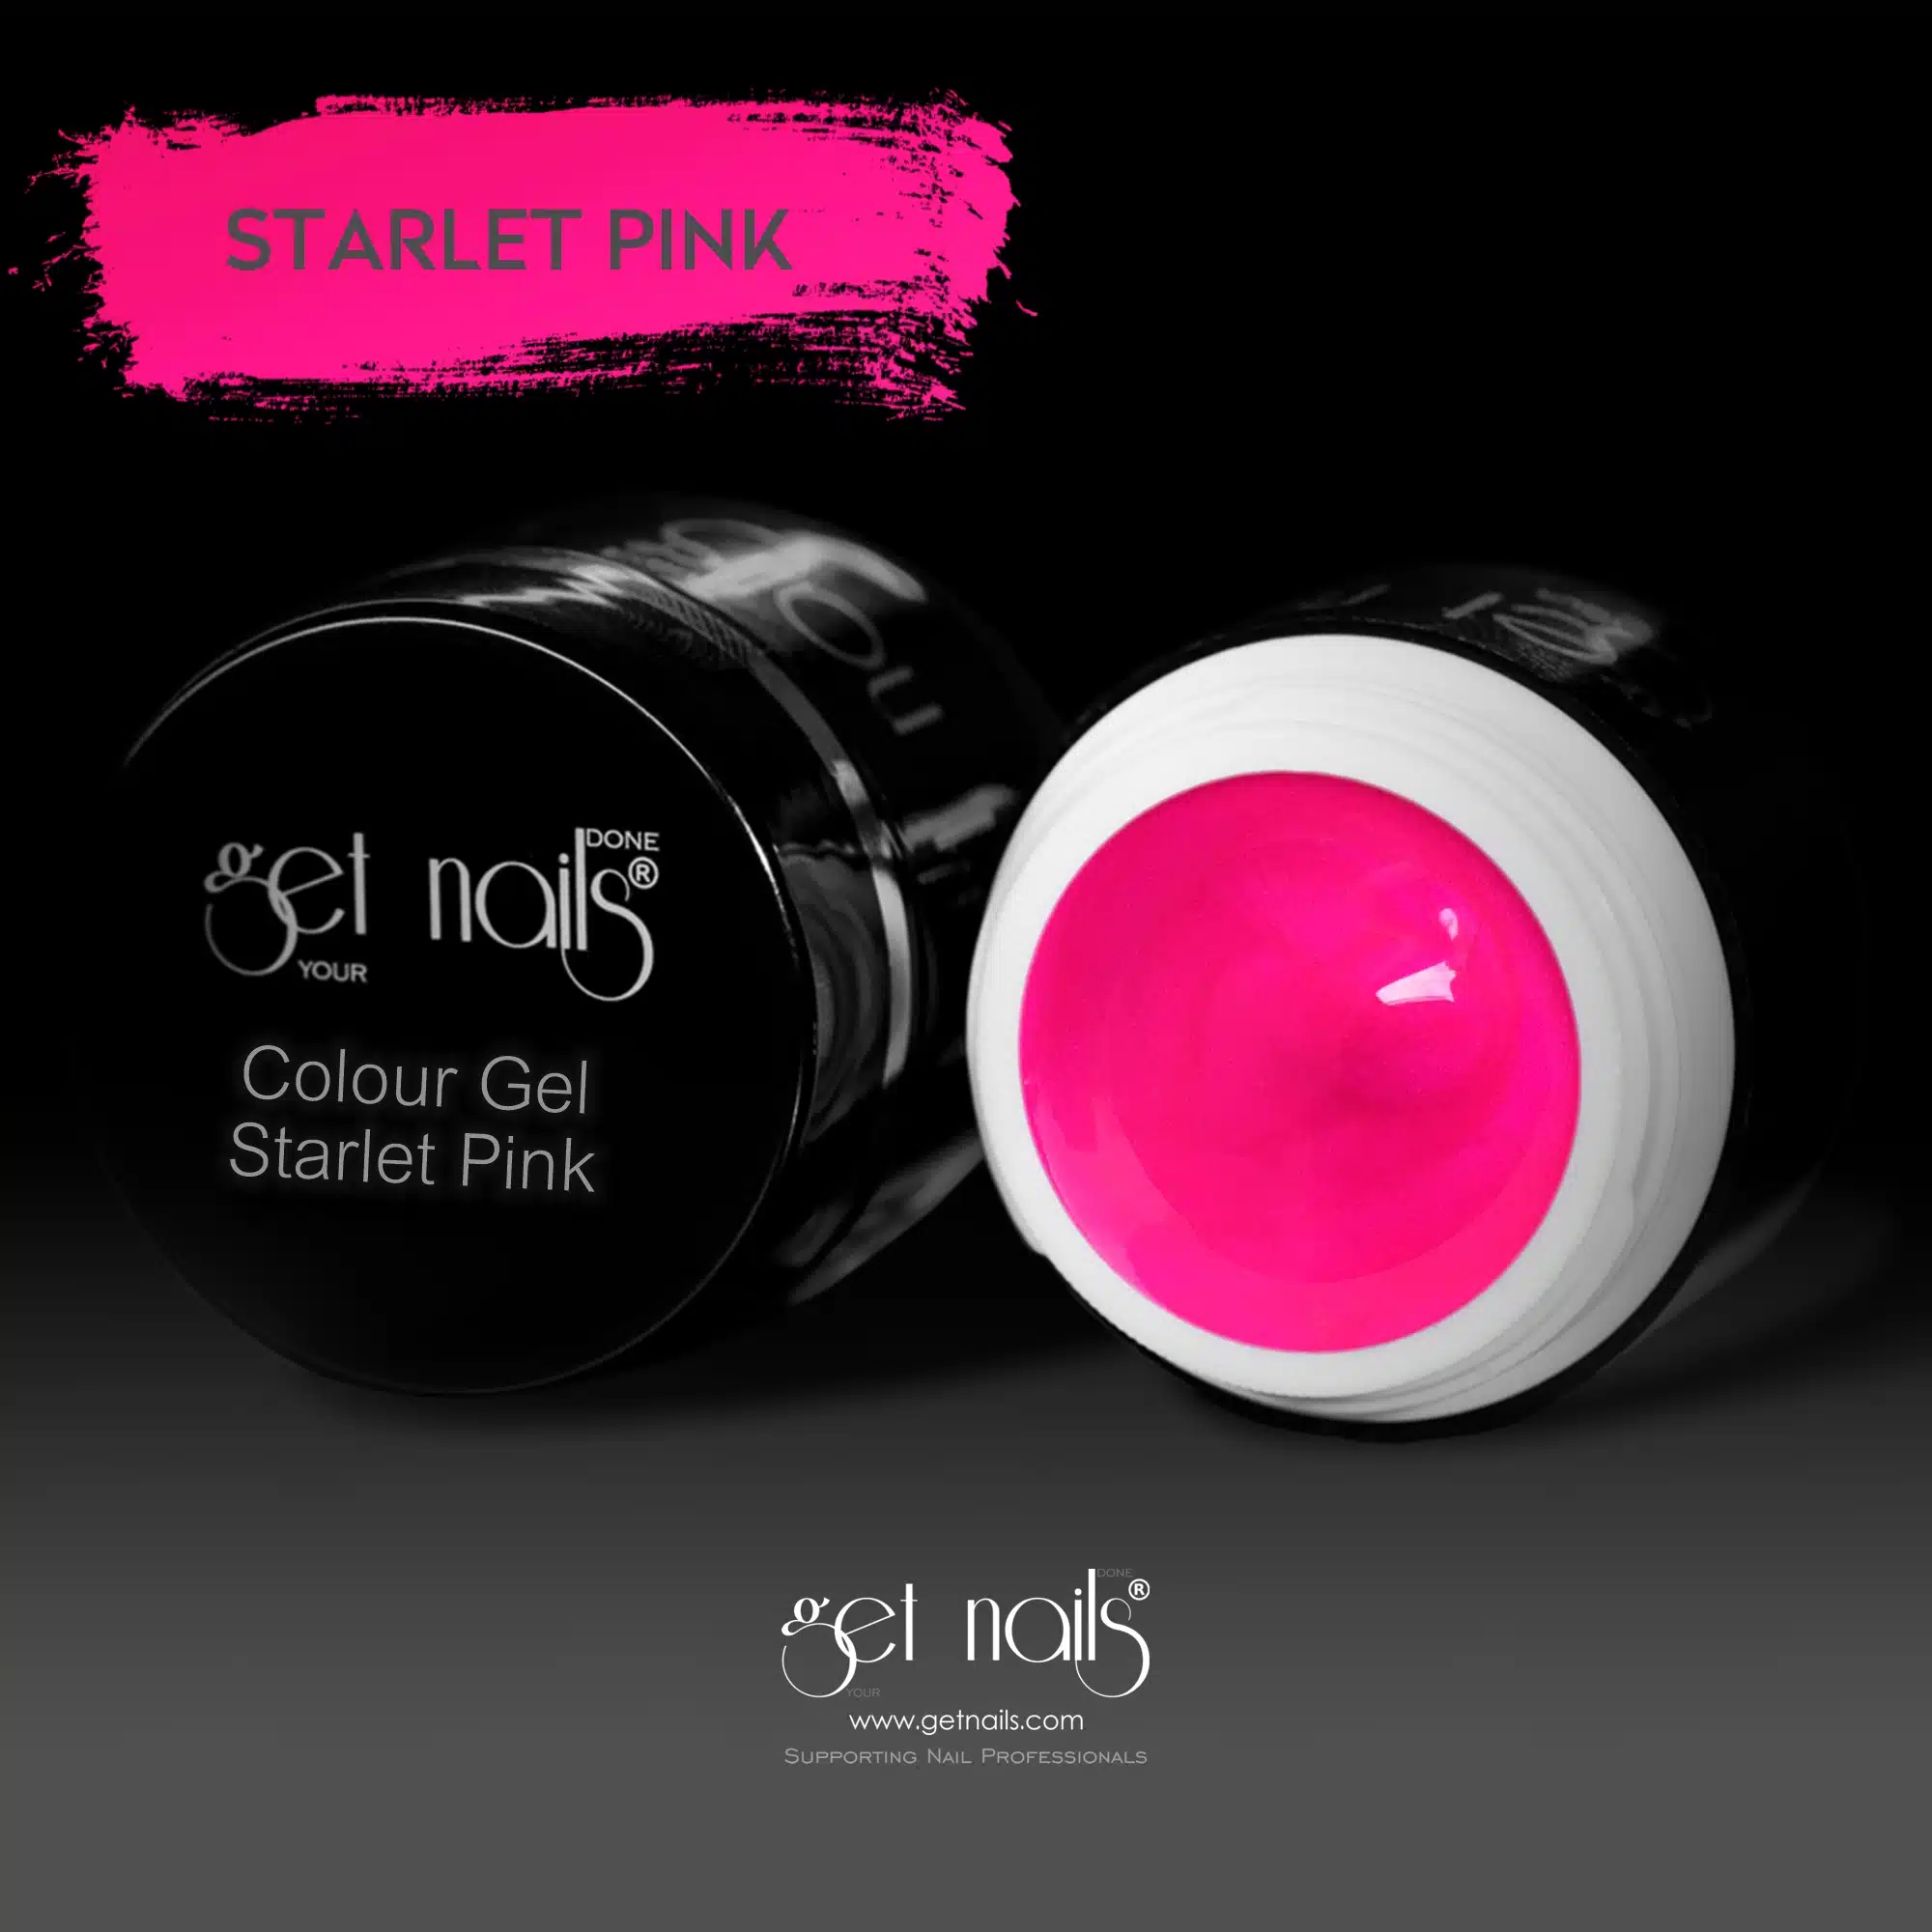 Get Nails Austria - Colour Gel Starlet Pink 5g